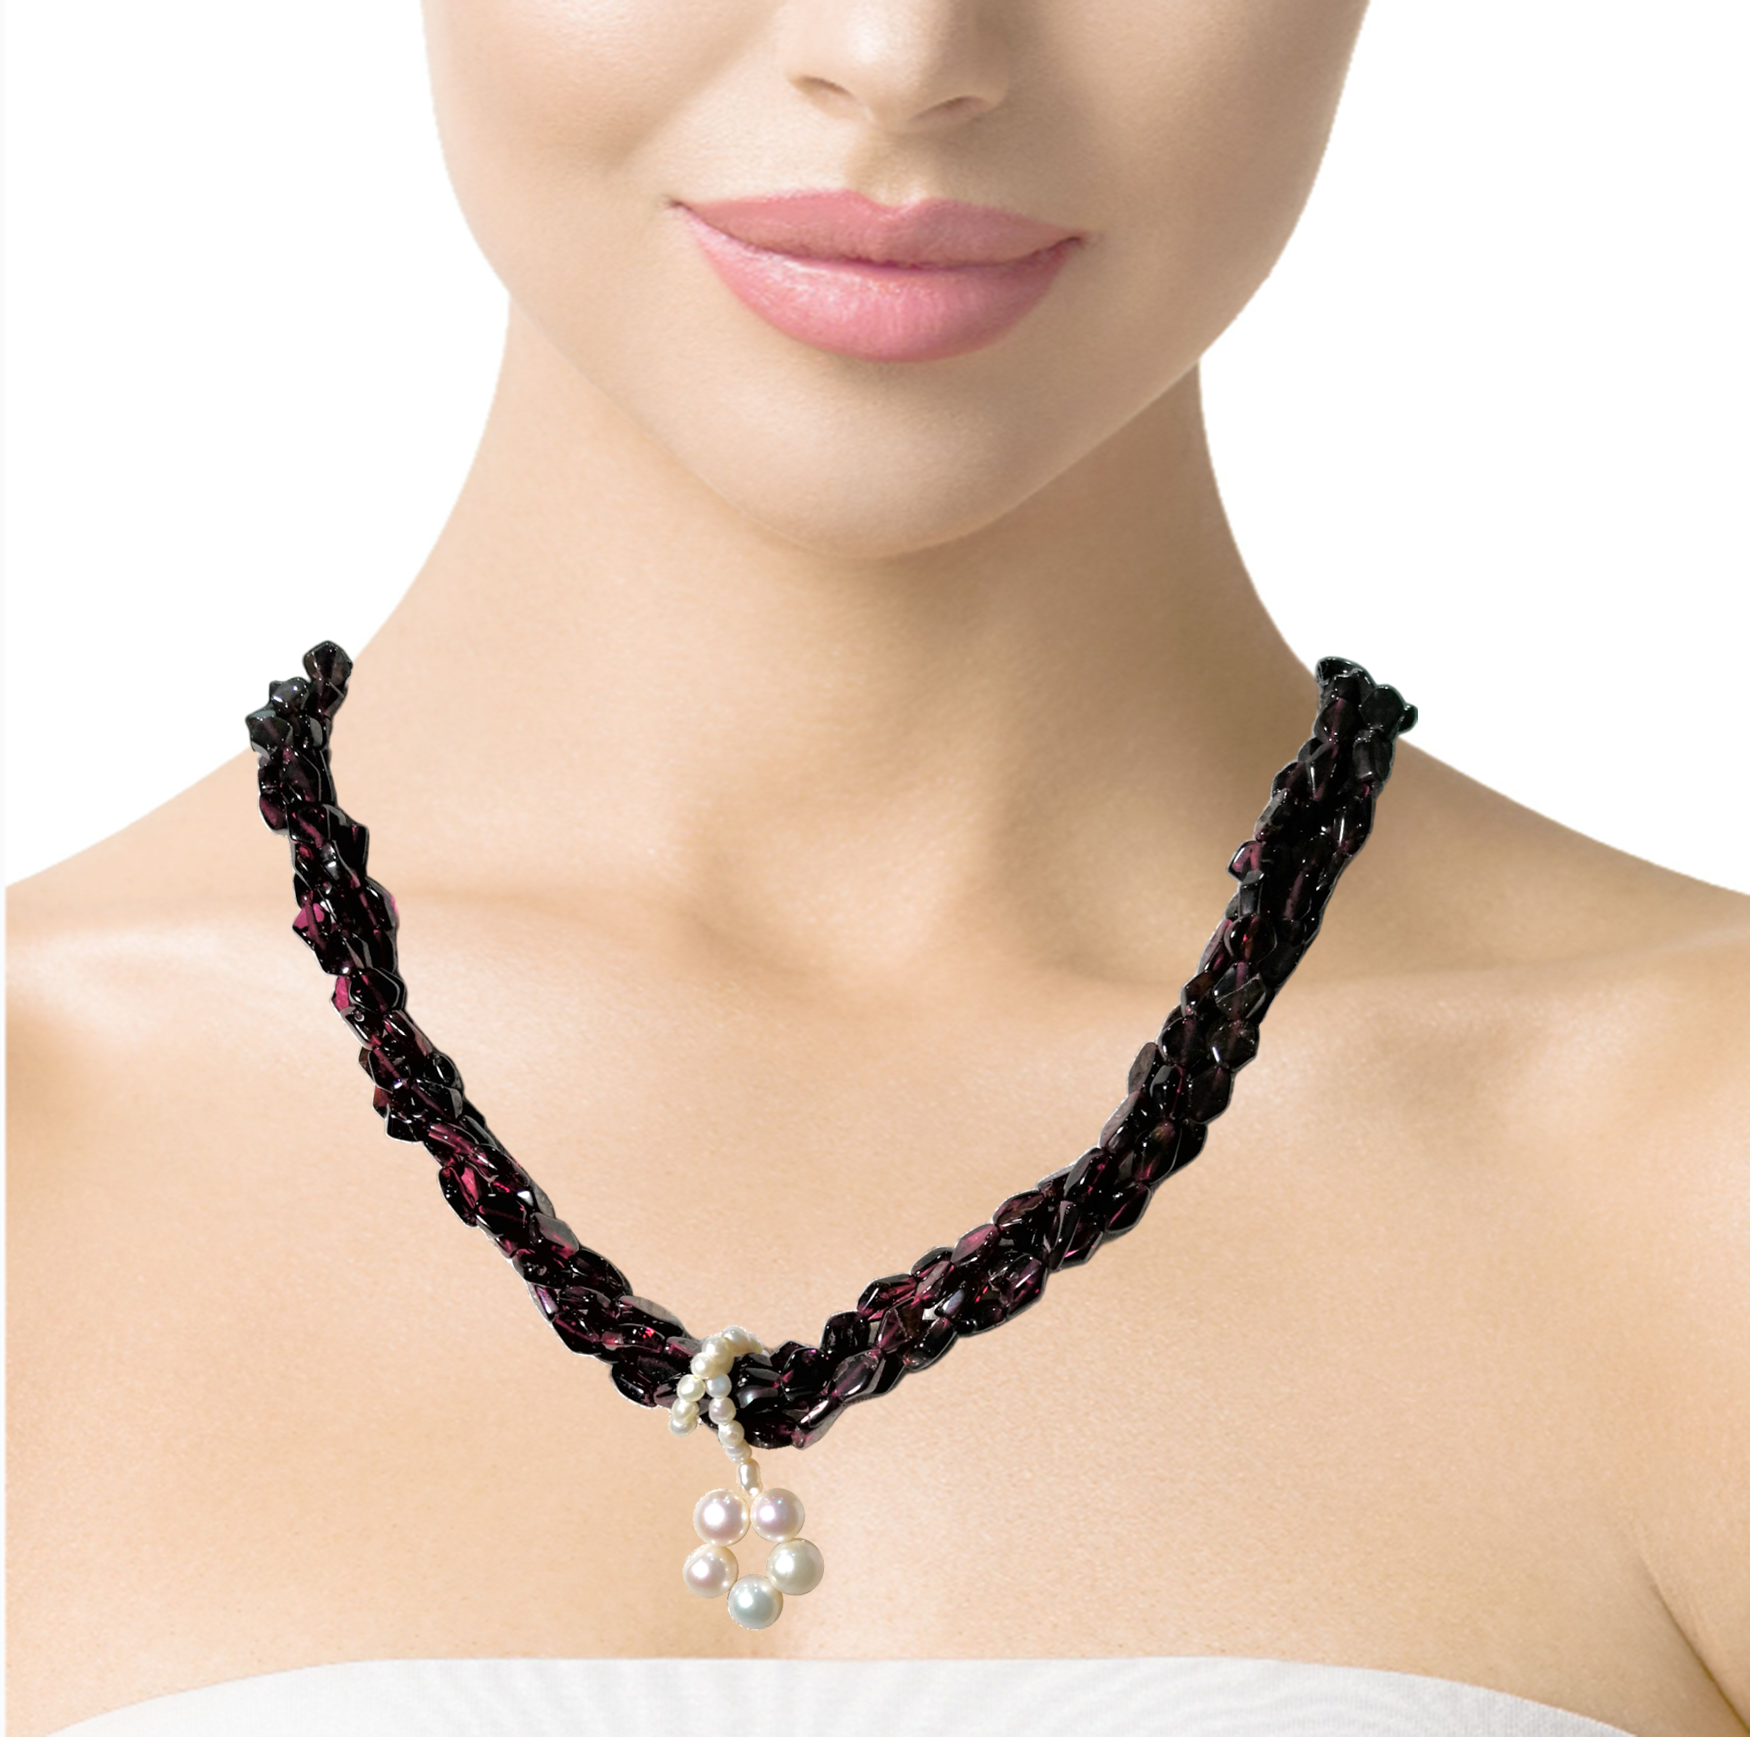 Natural Handmade Twisted Necklace 16"-18" Garnet Pearls Gemstone Beads Jewelry